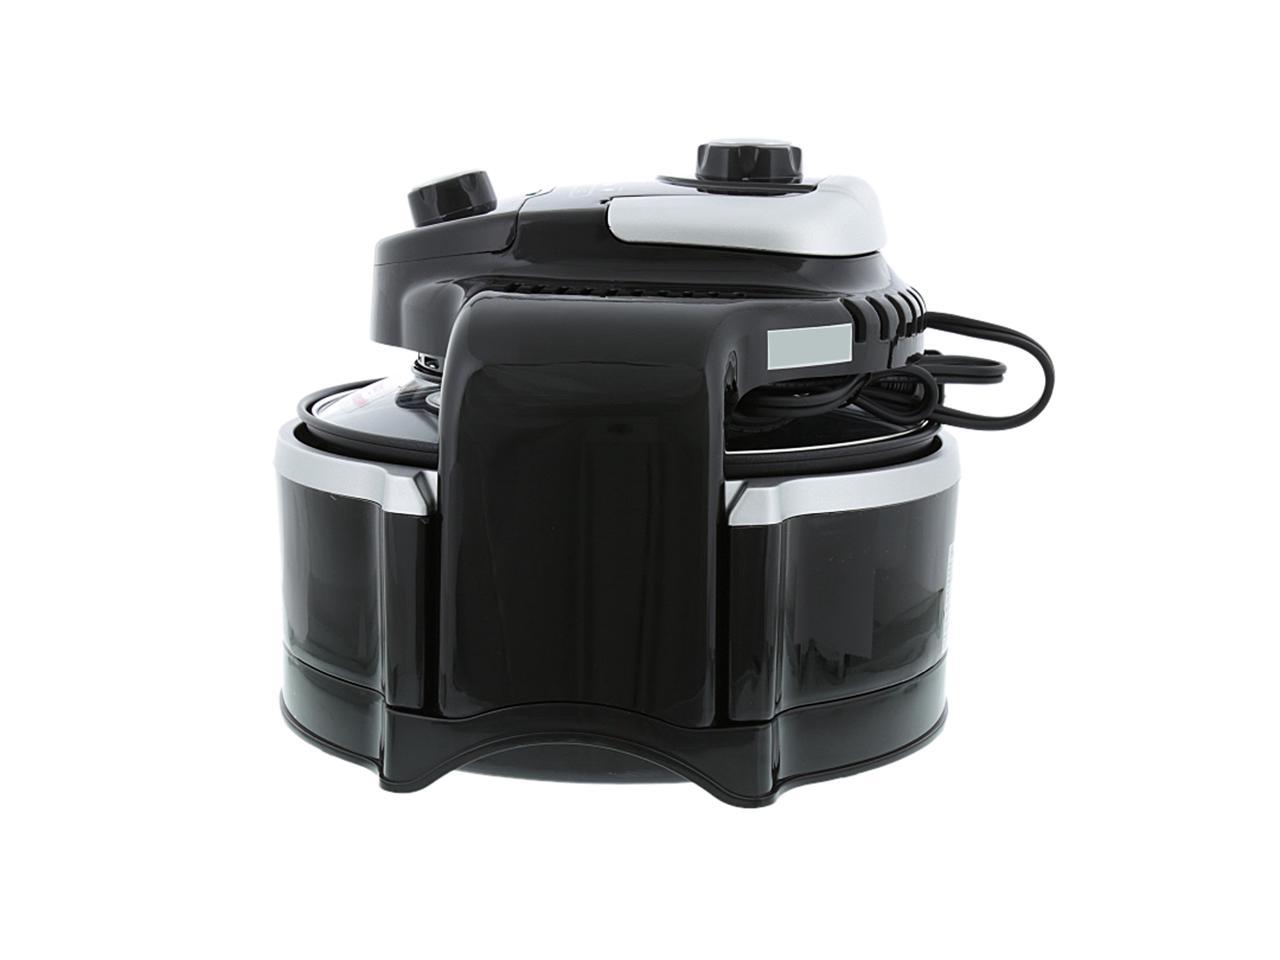 Rosewill Air Fryer 7.4-Quart (7 Liter) Oil-Less Low Fat Multicooker